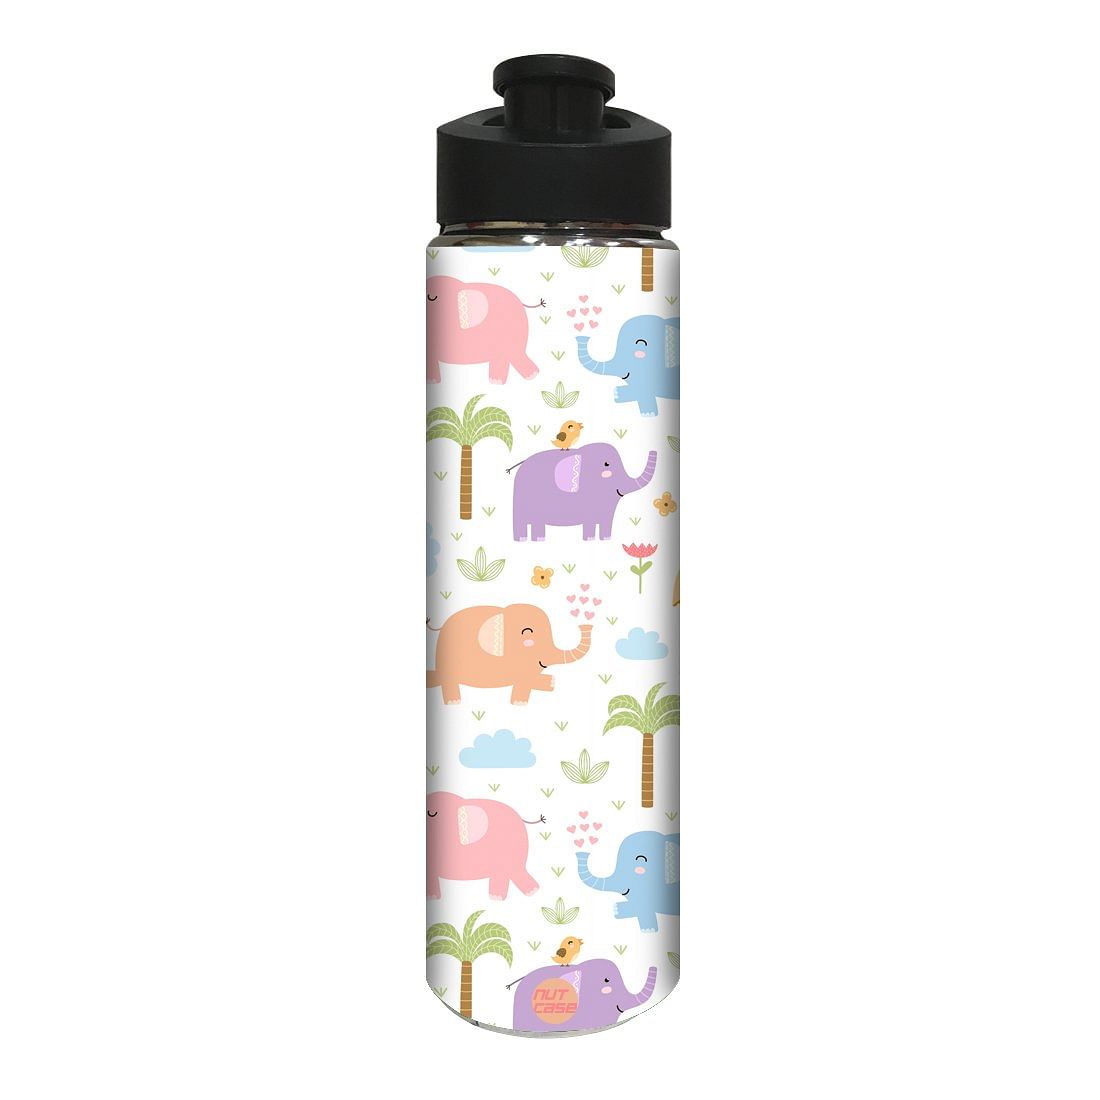 Children Bottle for Birthday Return Gifts Ideas - Cute Elephant Nutcase